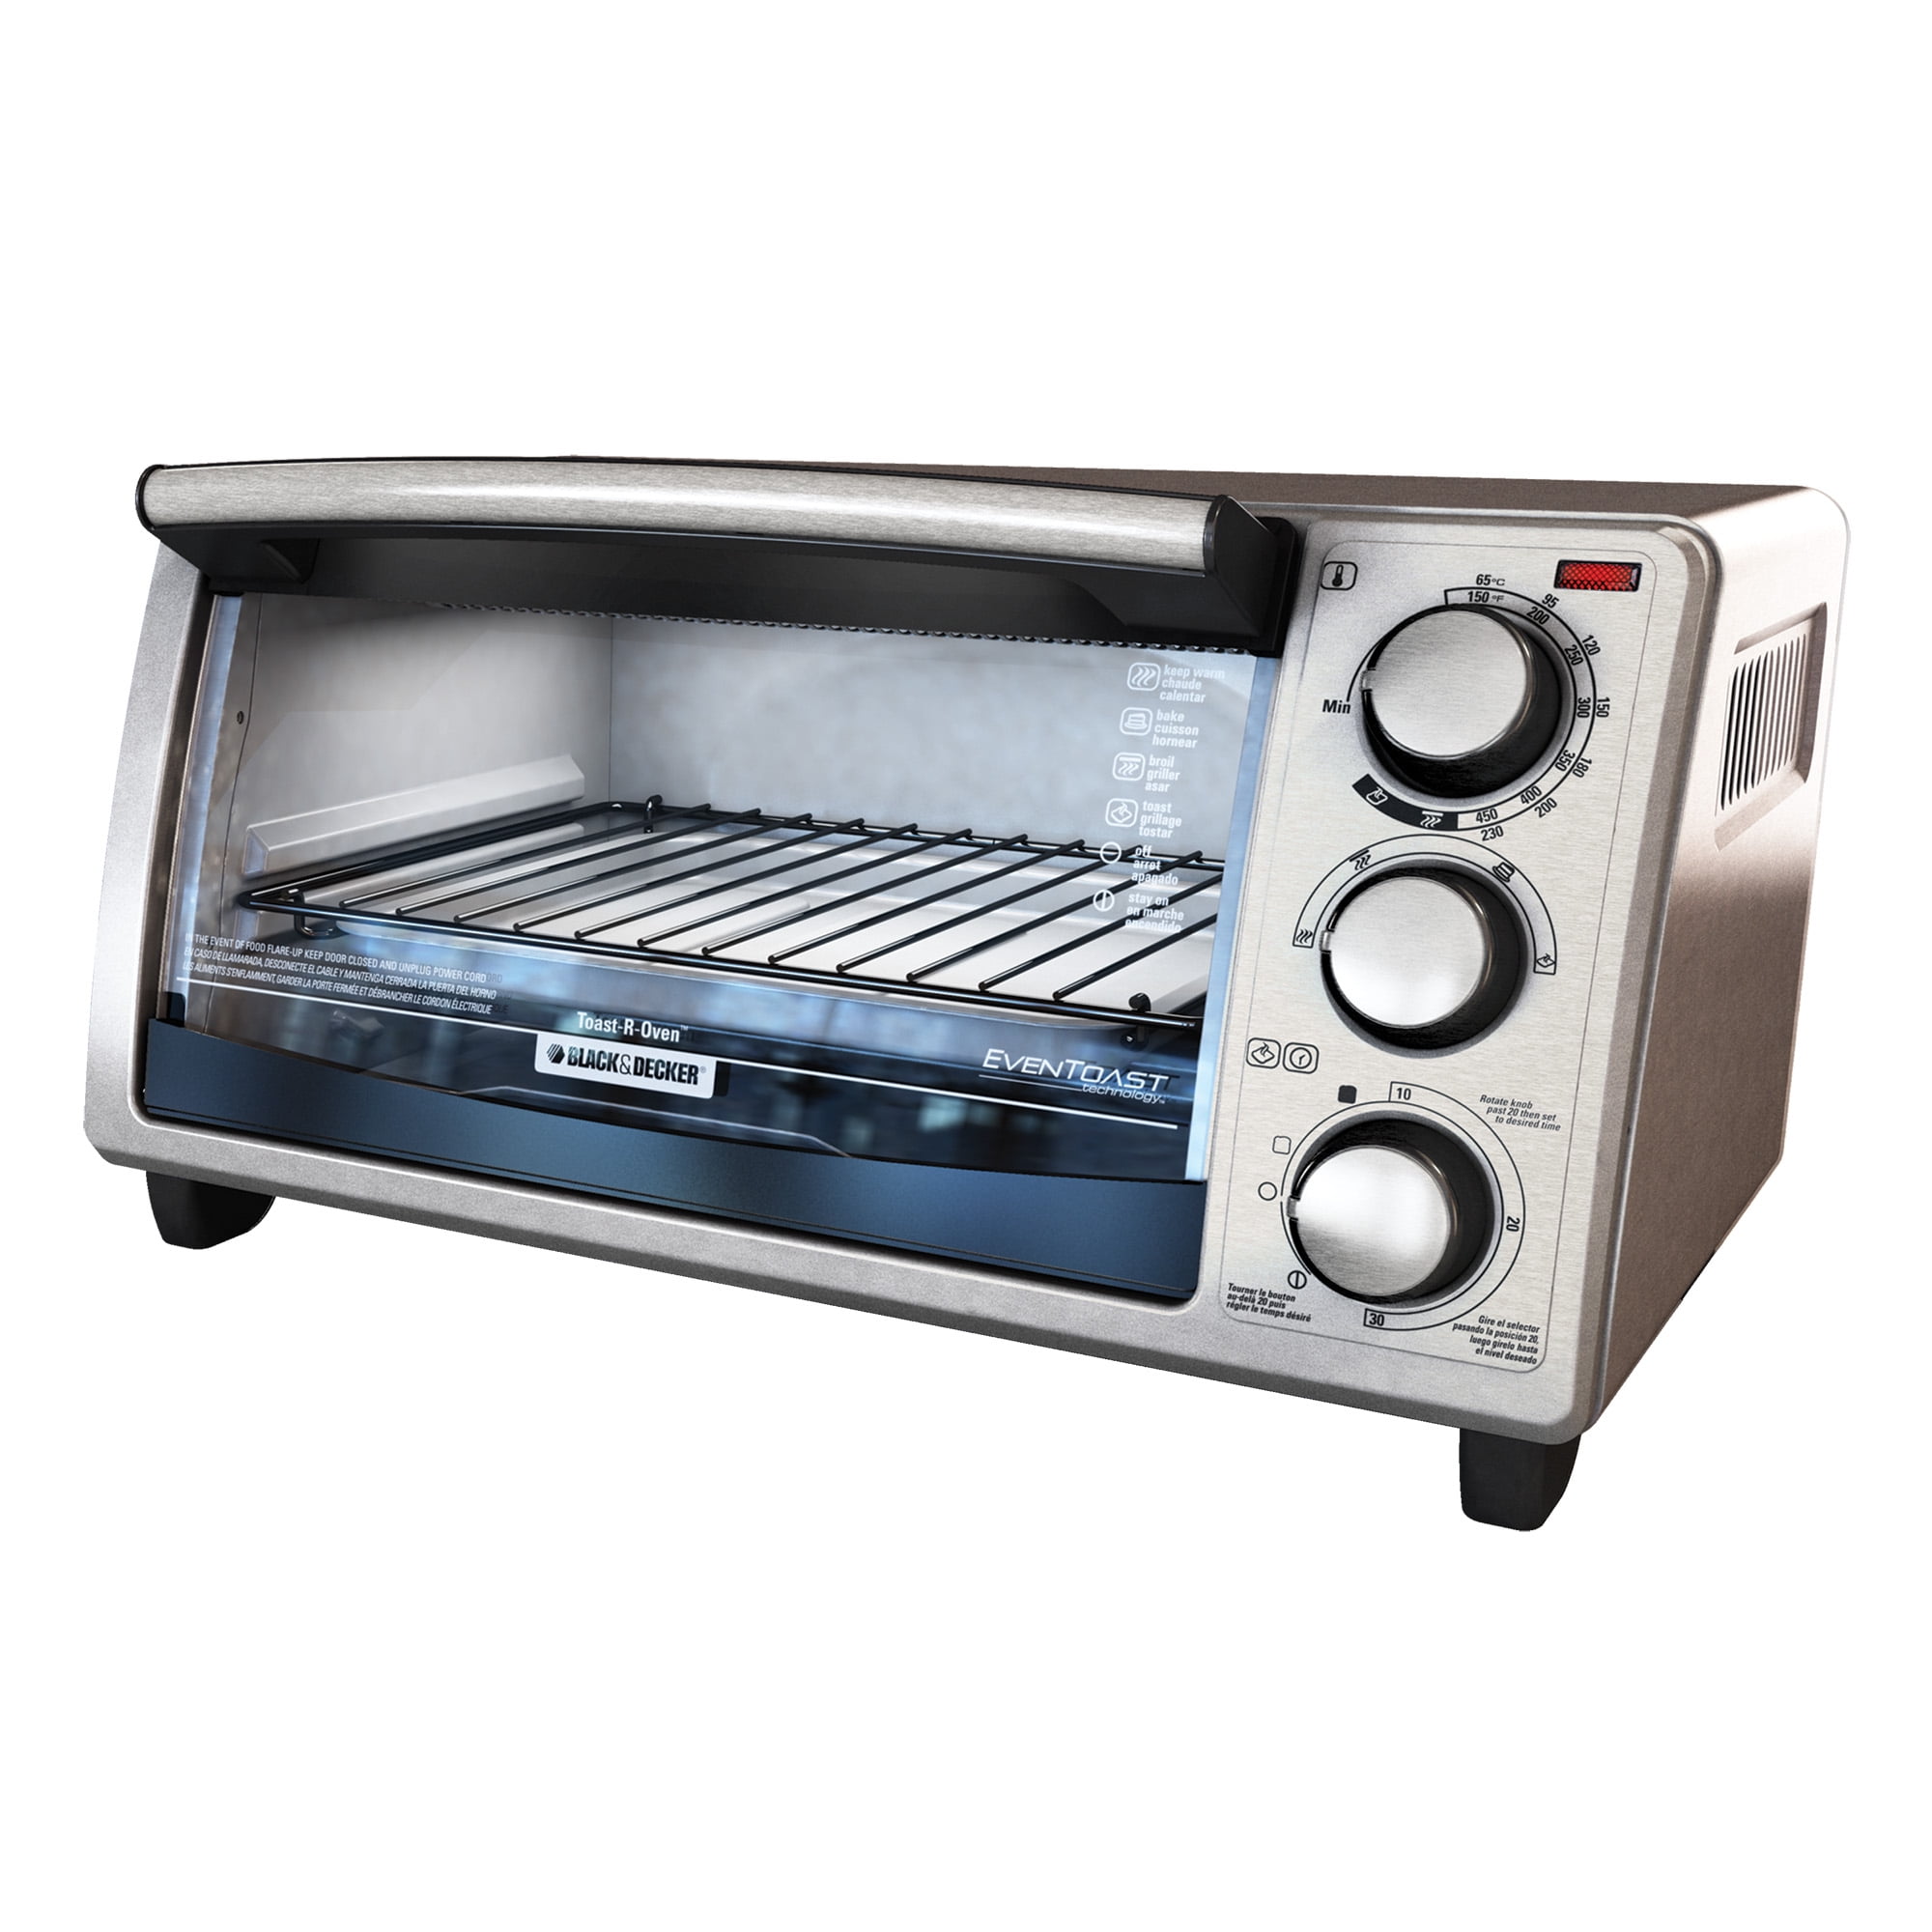 Black & Decker 4-Slice Toaster Oven Review 